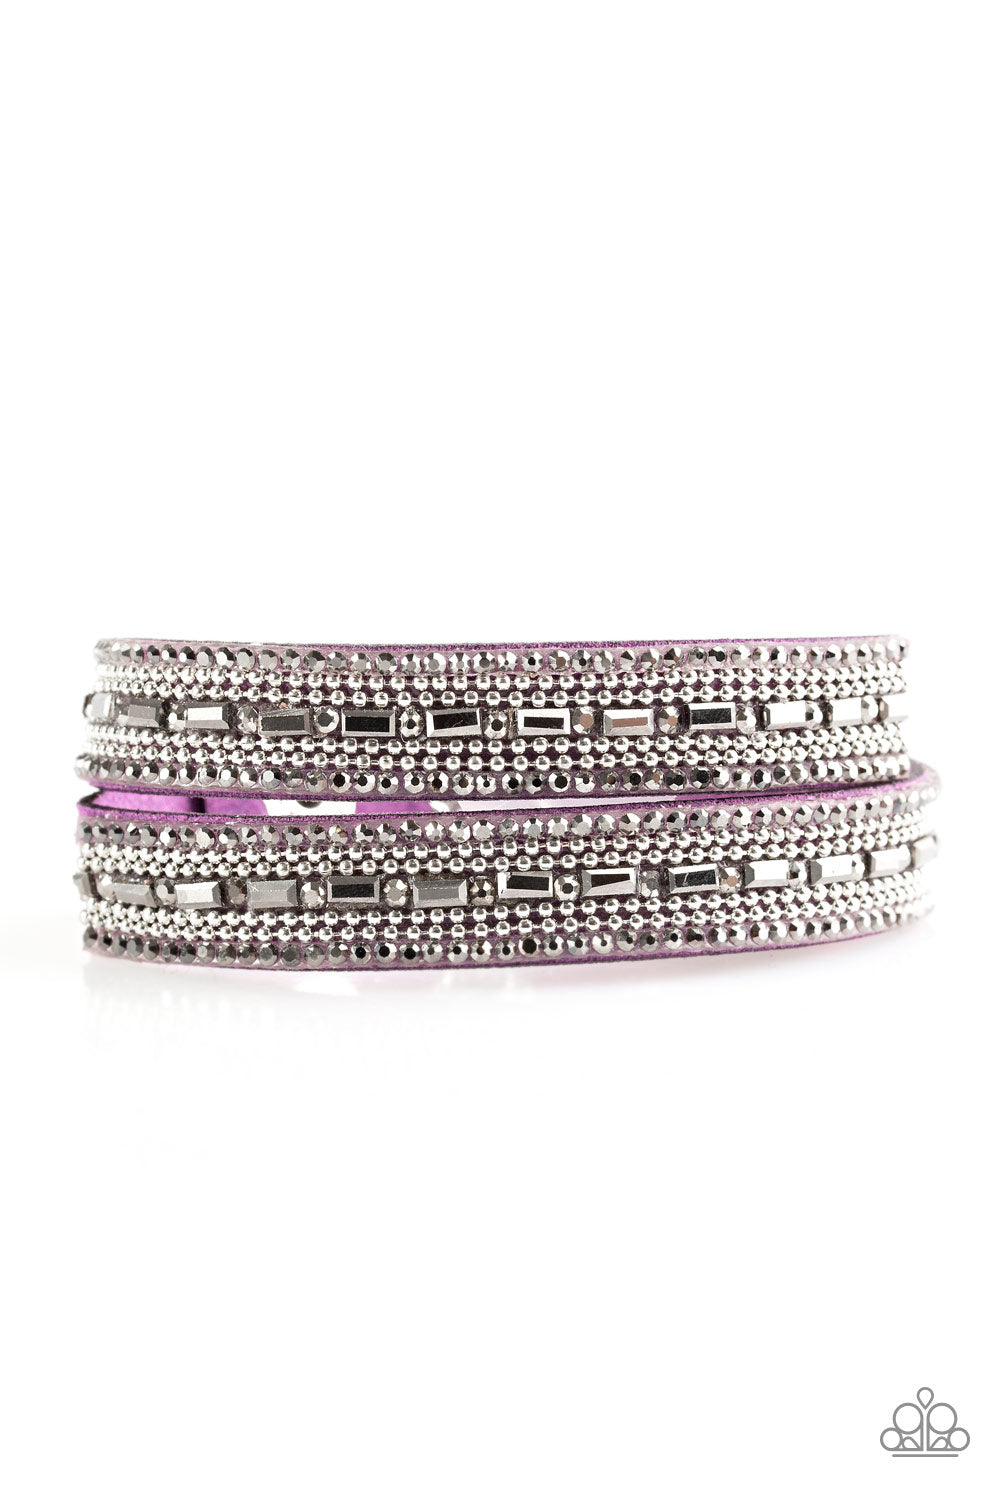 Shimmer and Sass - Purple Urban Bracelet freeshipping - JewLz4u Gemstone Gallery